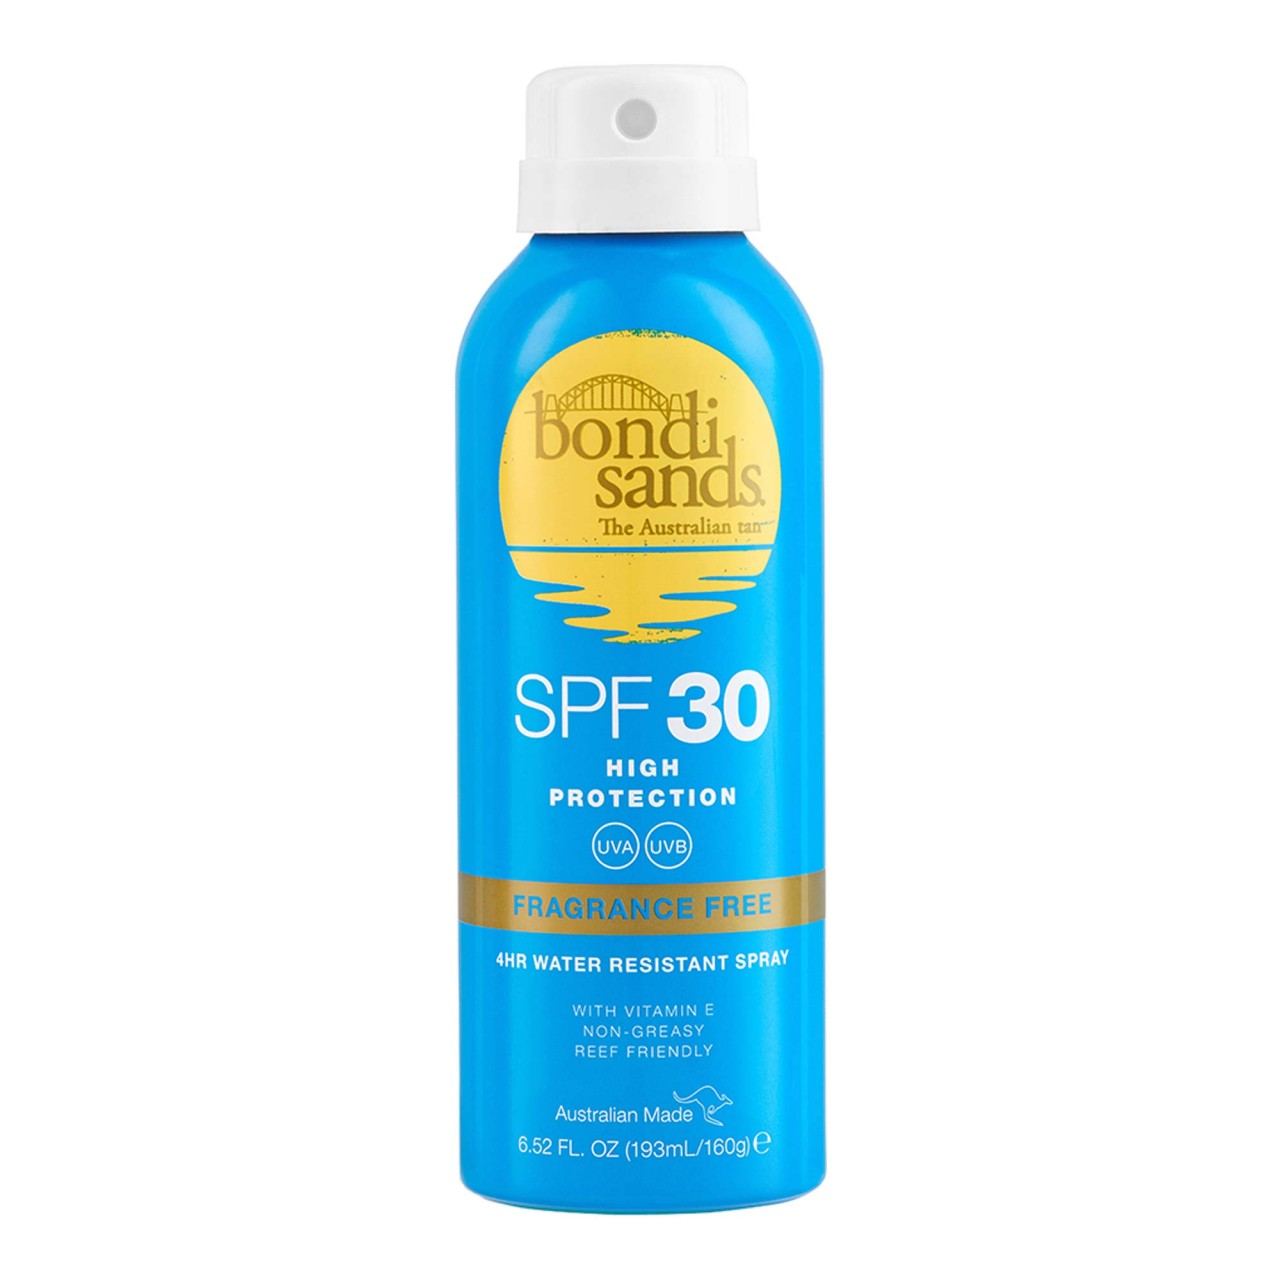 bondi sands - Sunscreen Spray Fragrance Free SPF 30 - 